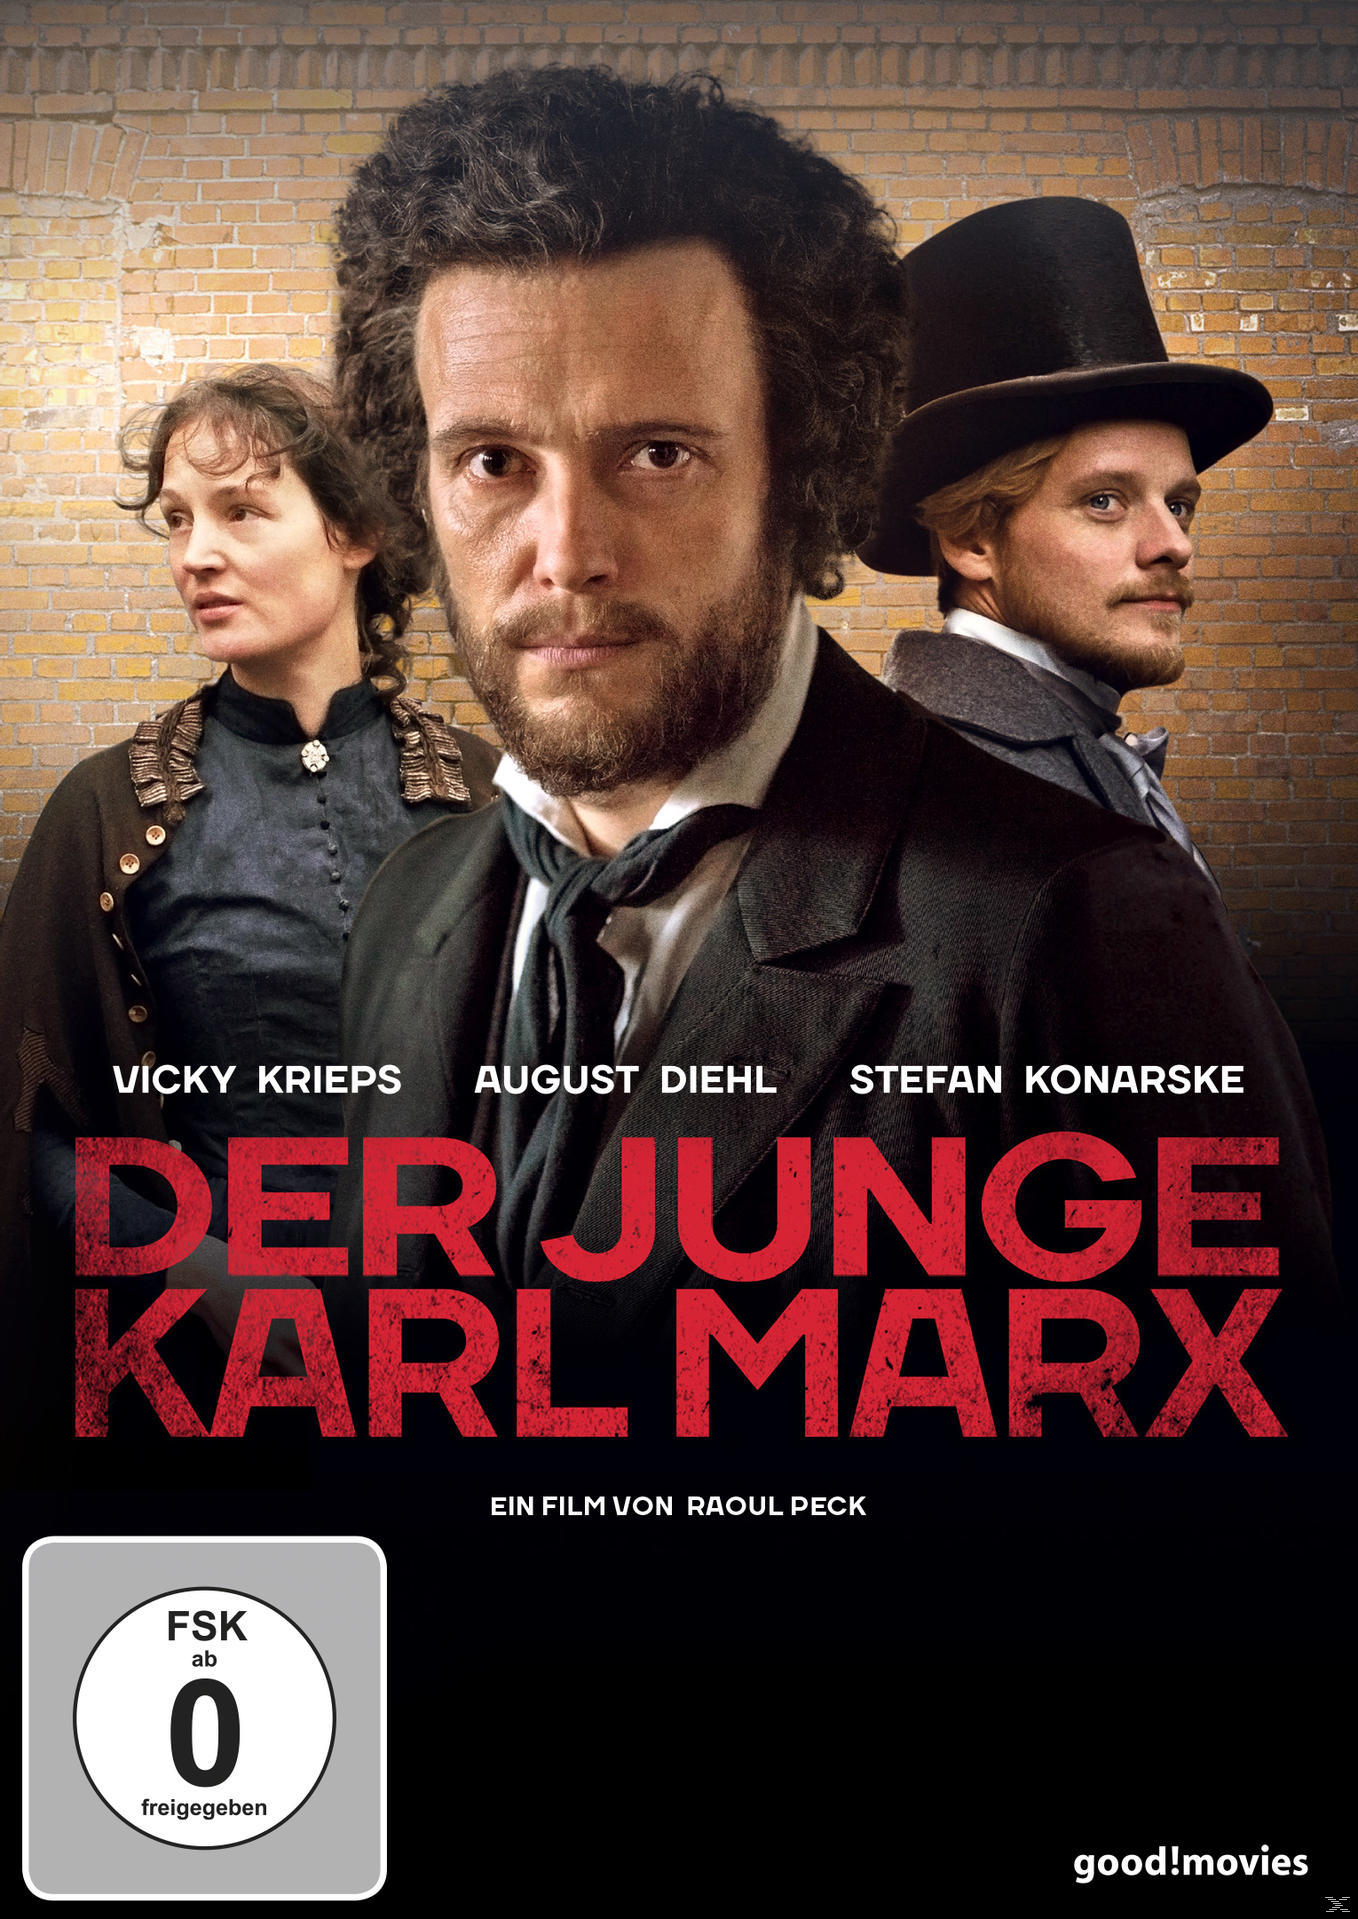 DVD Der Karl Marx junge